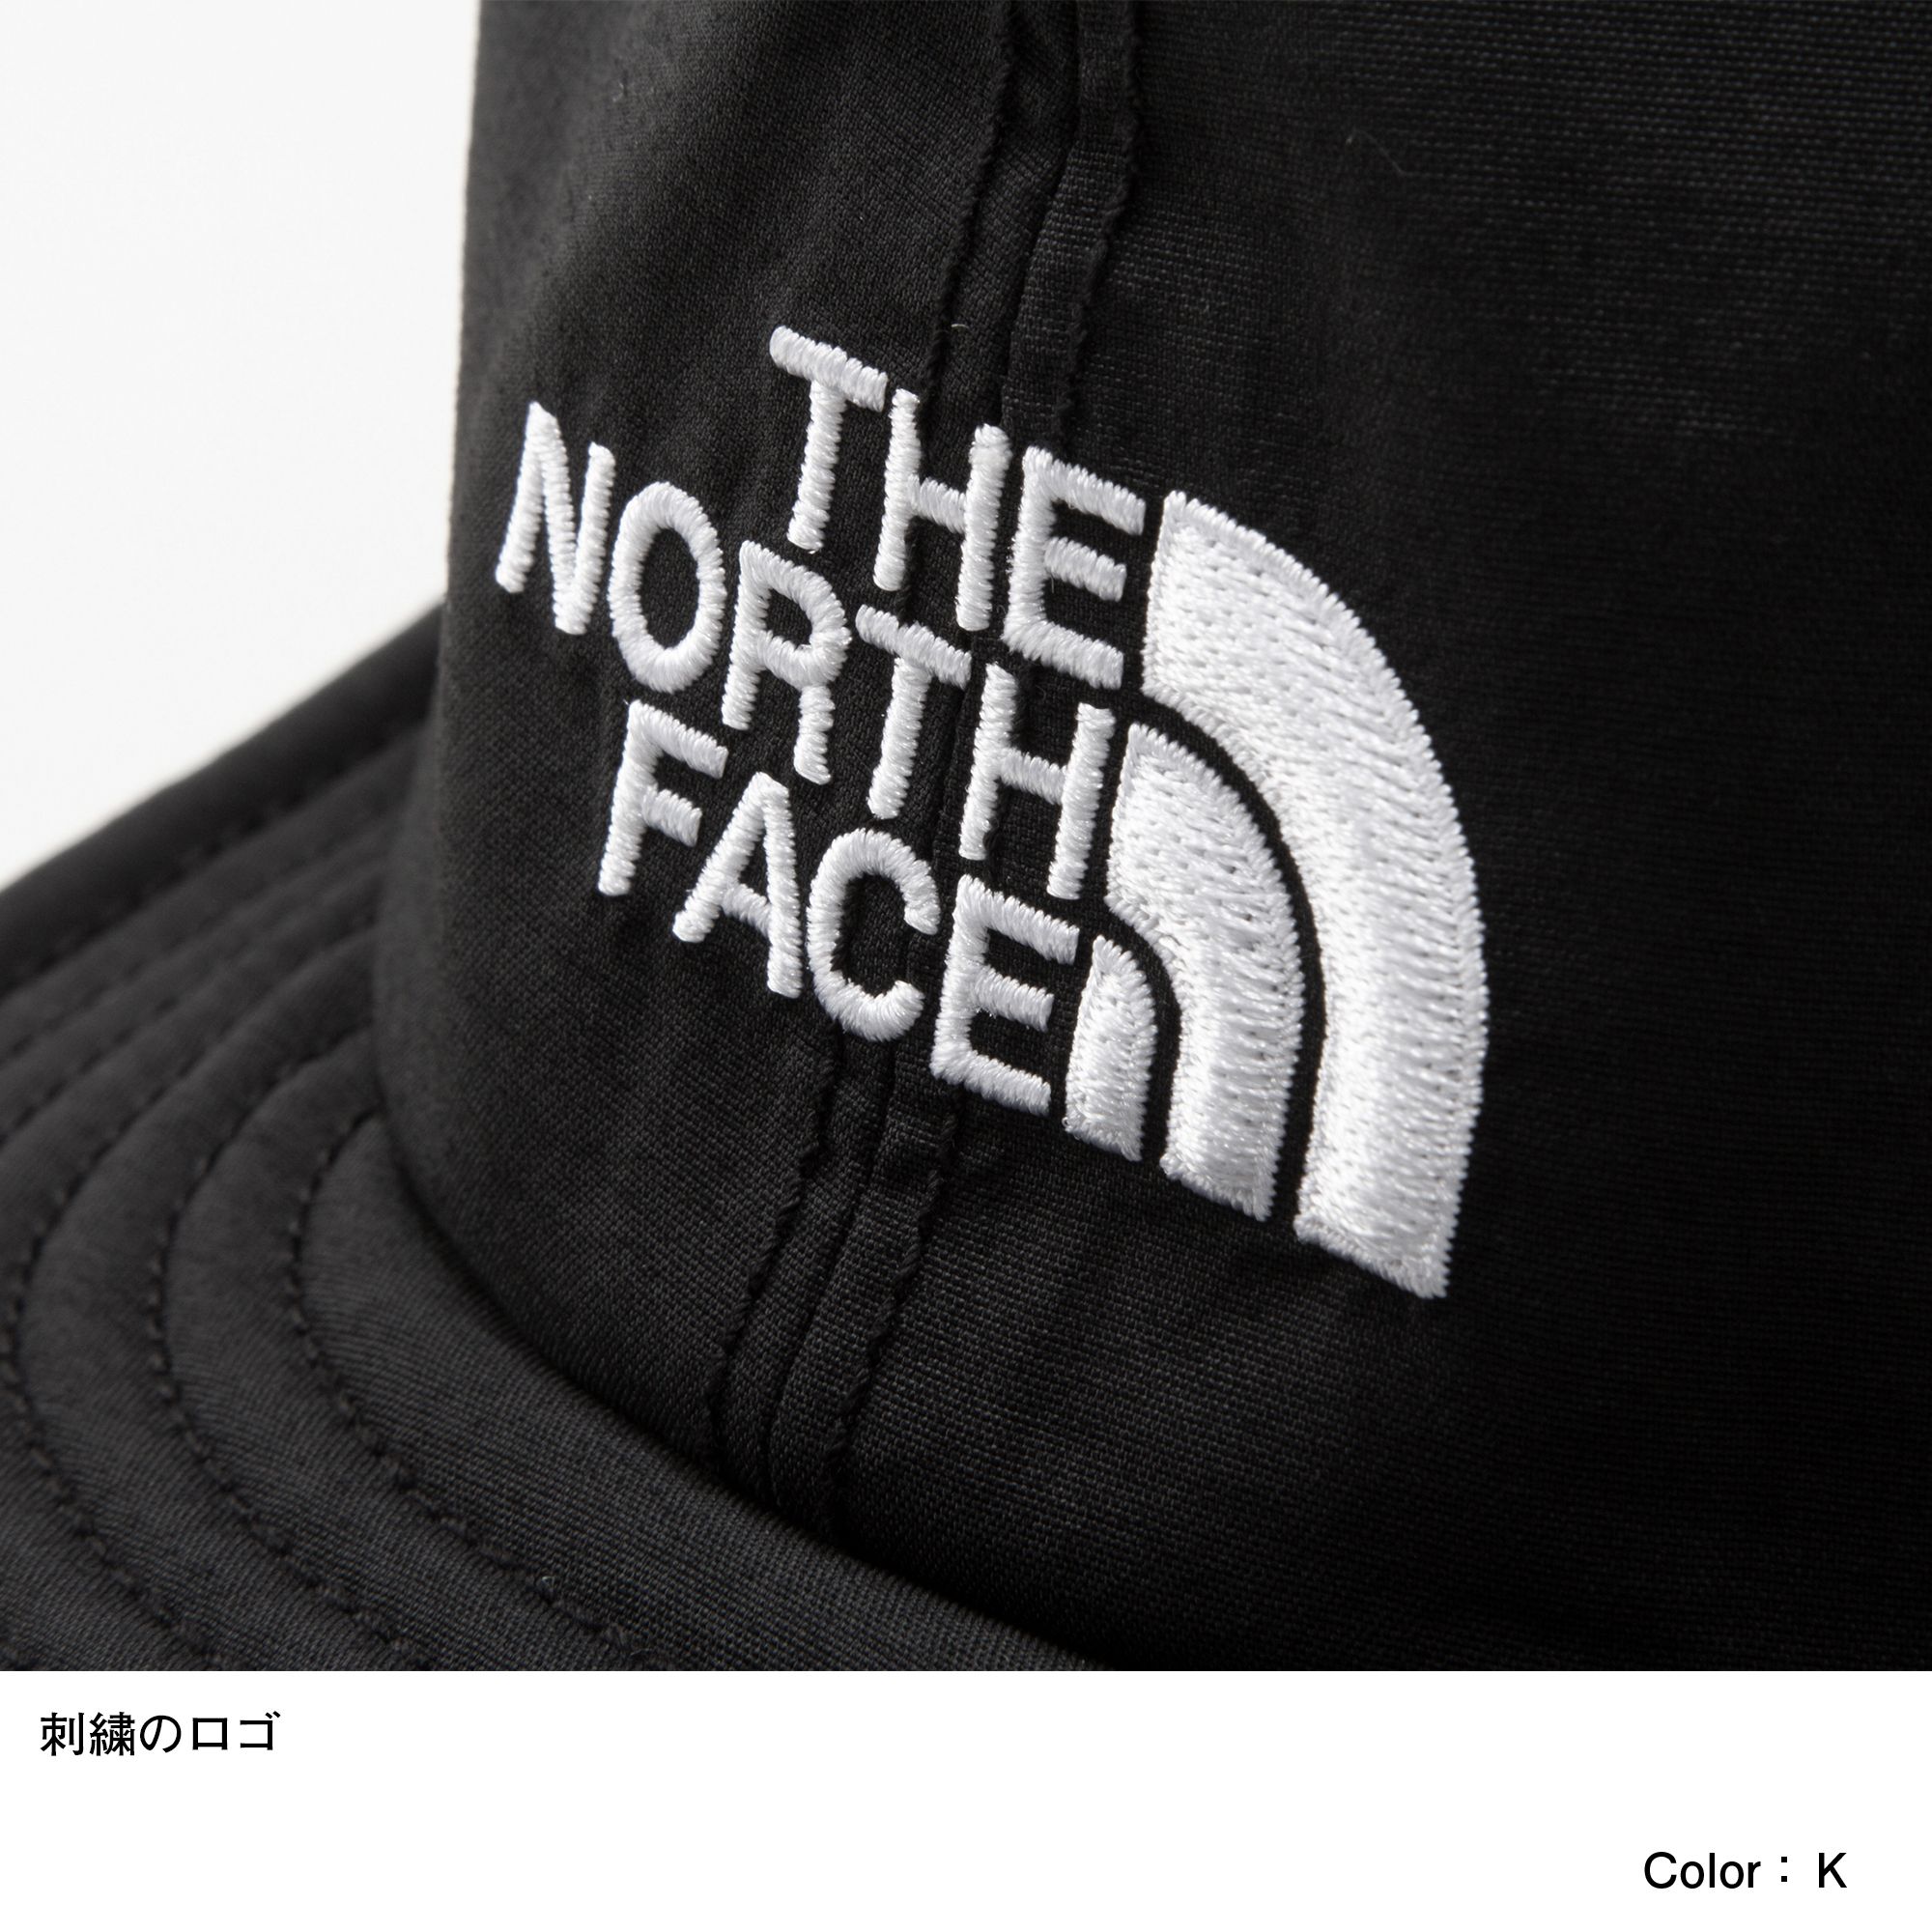 the north face baseball cap